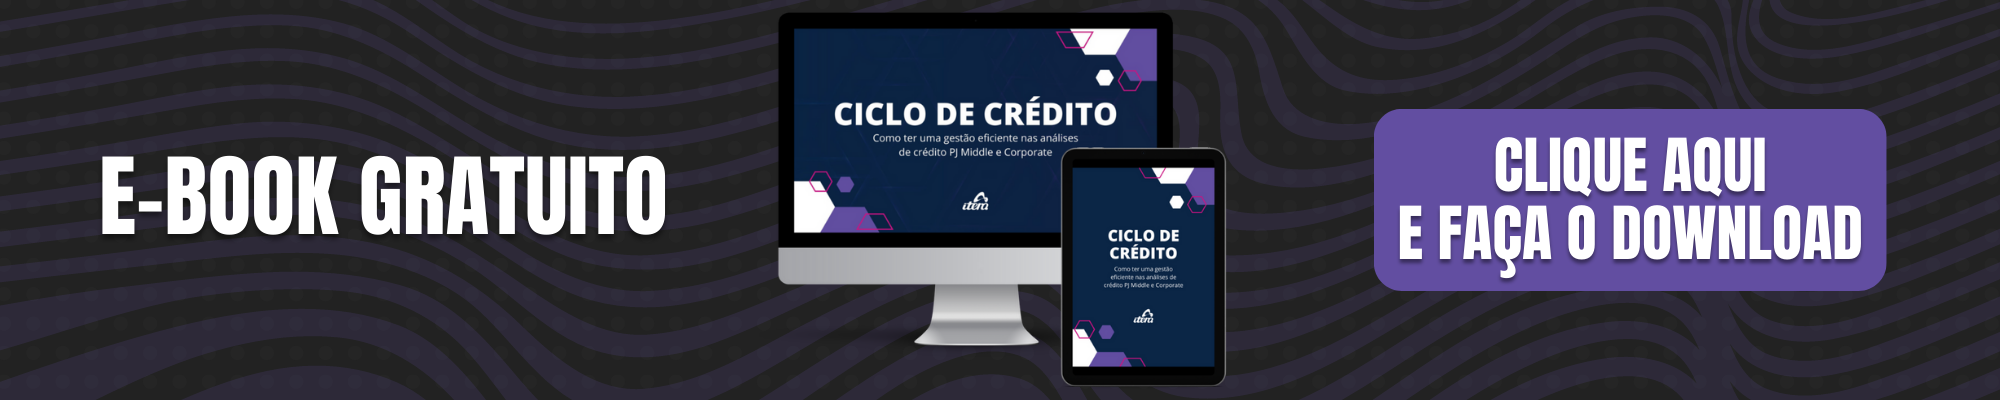 e-book itera ciclo de crédito